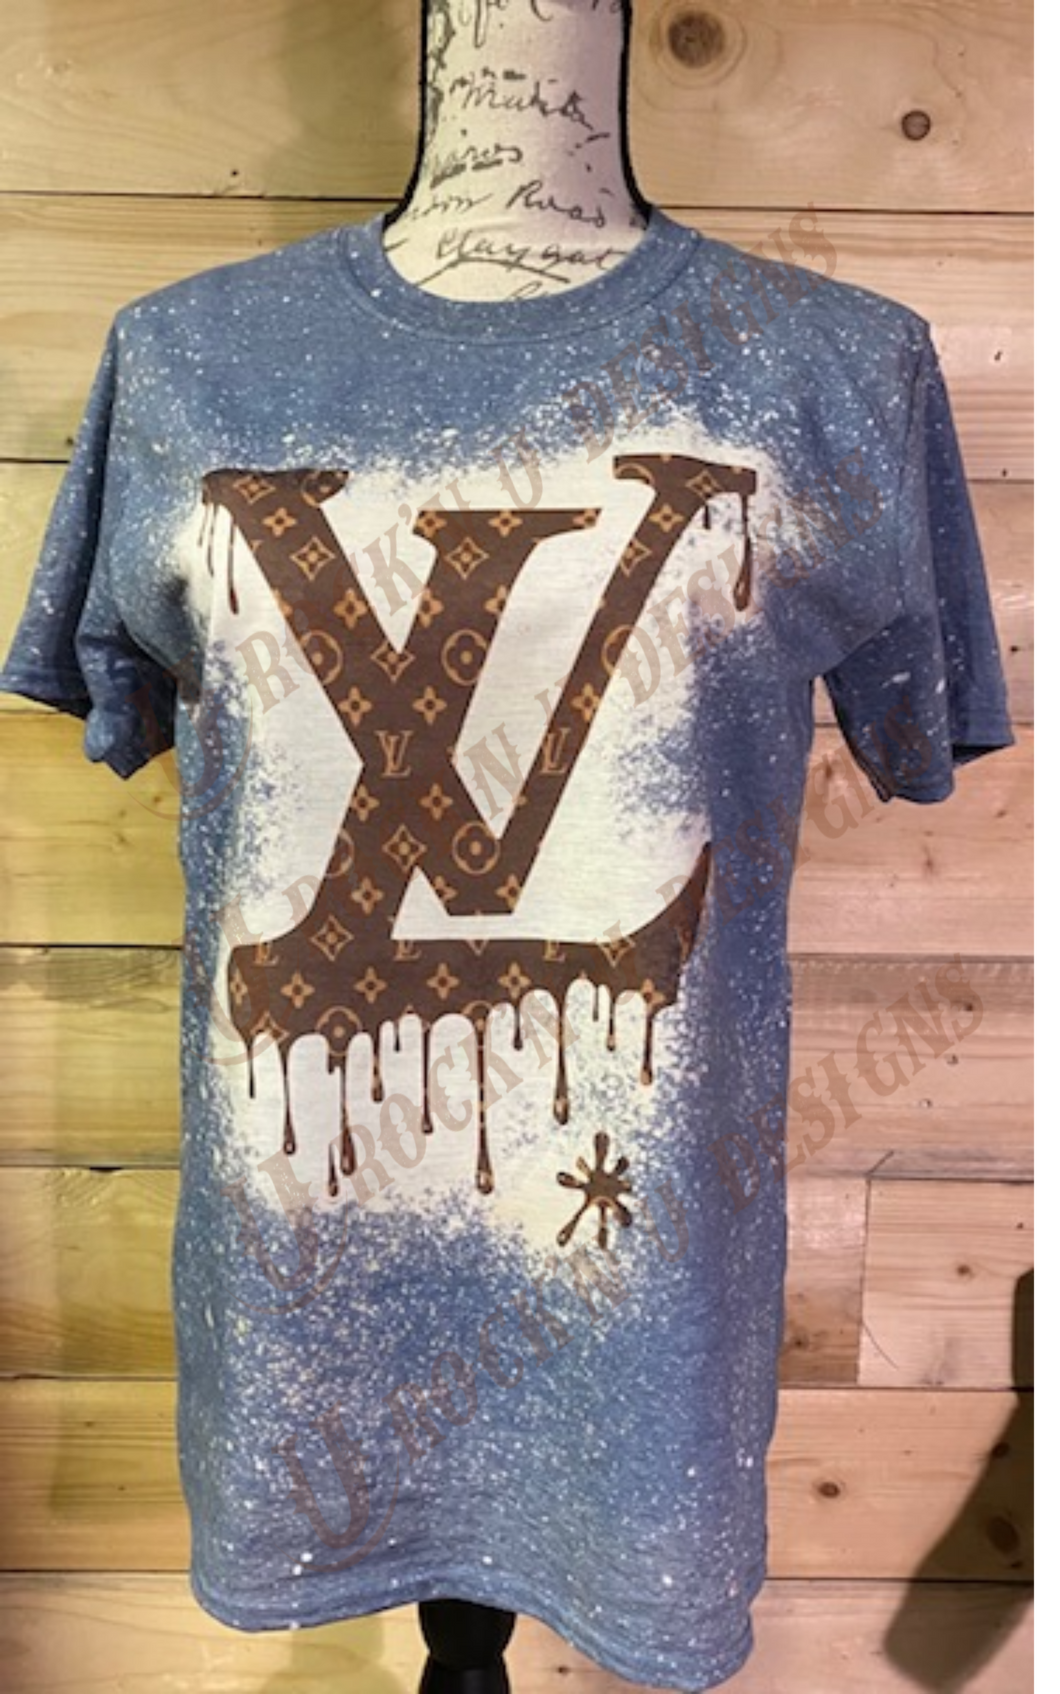 Rock'n U Designs LV Drip Custom Bleached Graphic T-Shirt S / Indigo